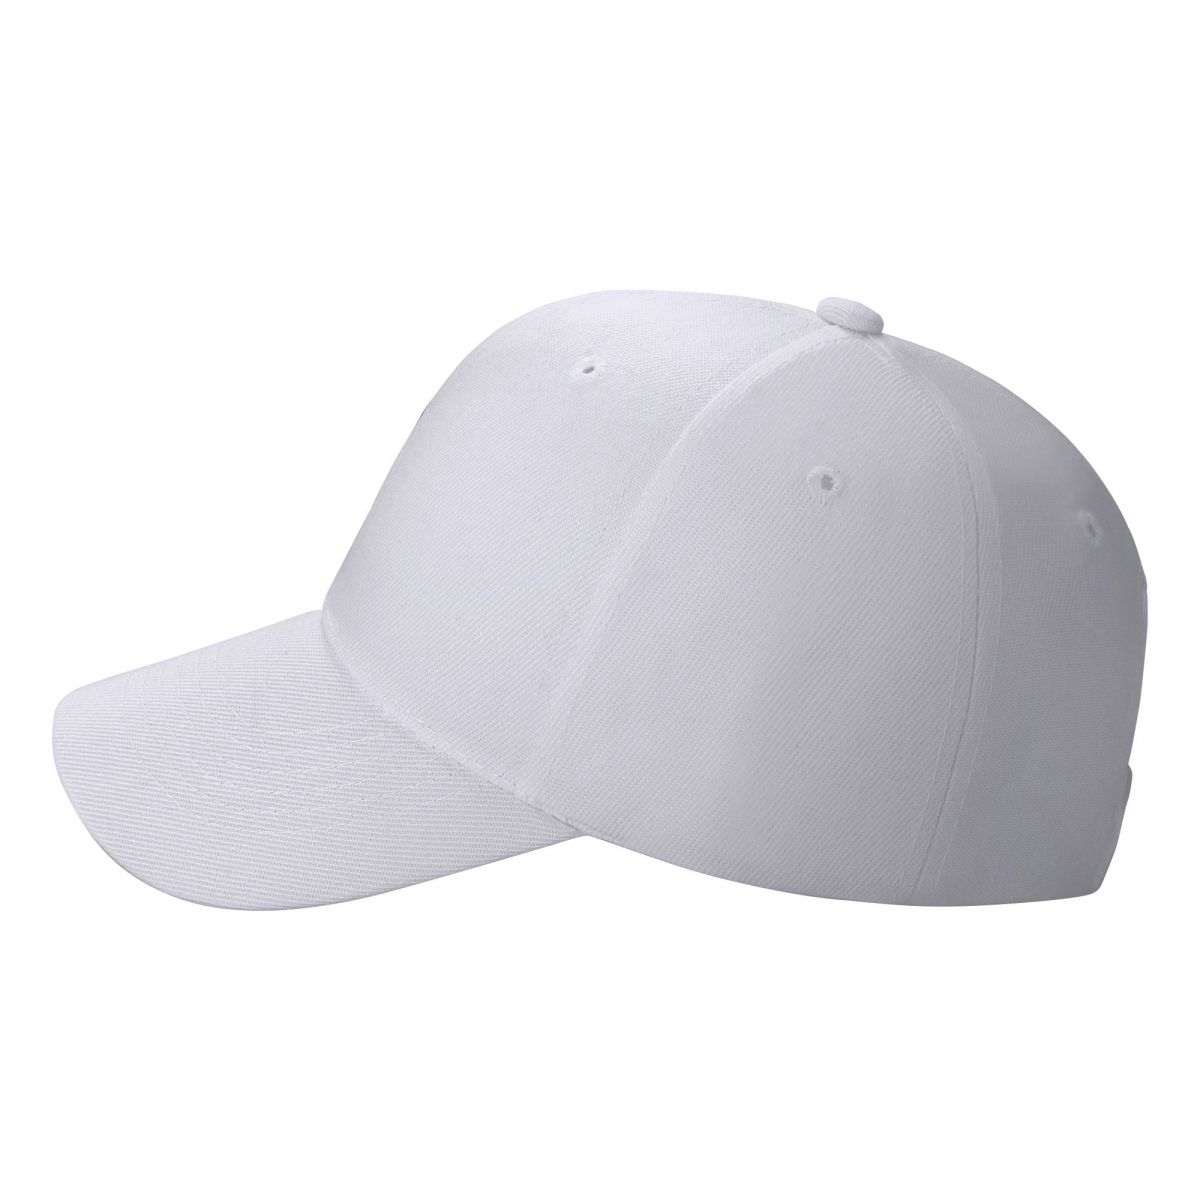 Omori Something Omori Game Omori Cap baseball cap Golf wear new in hat Caps women Men 2 - Omori Plush